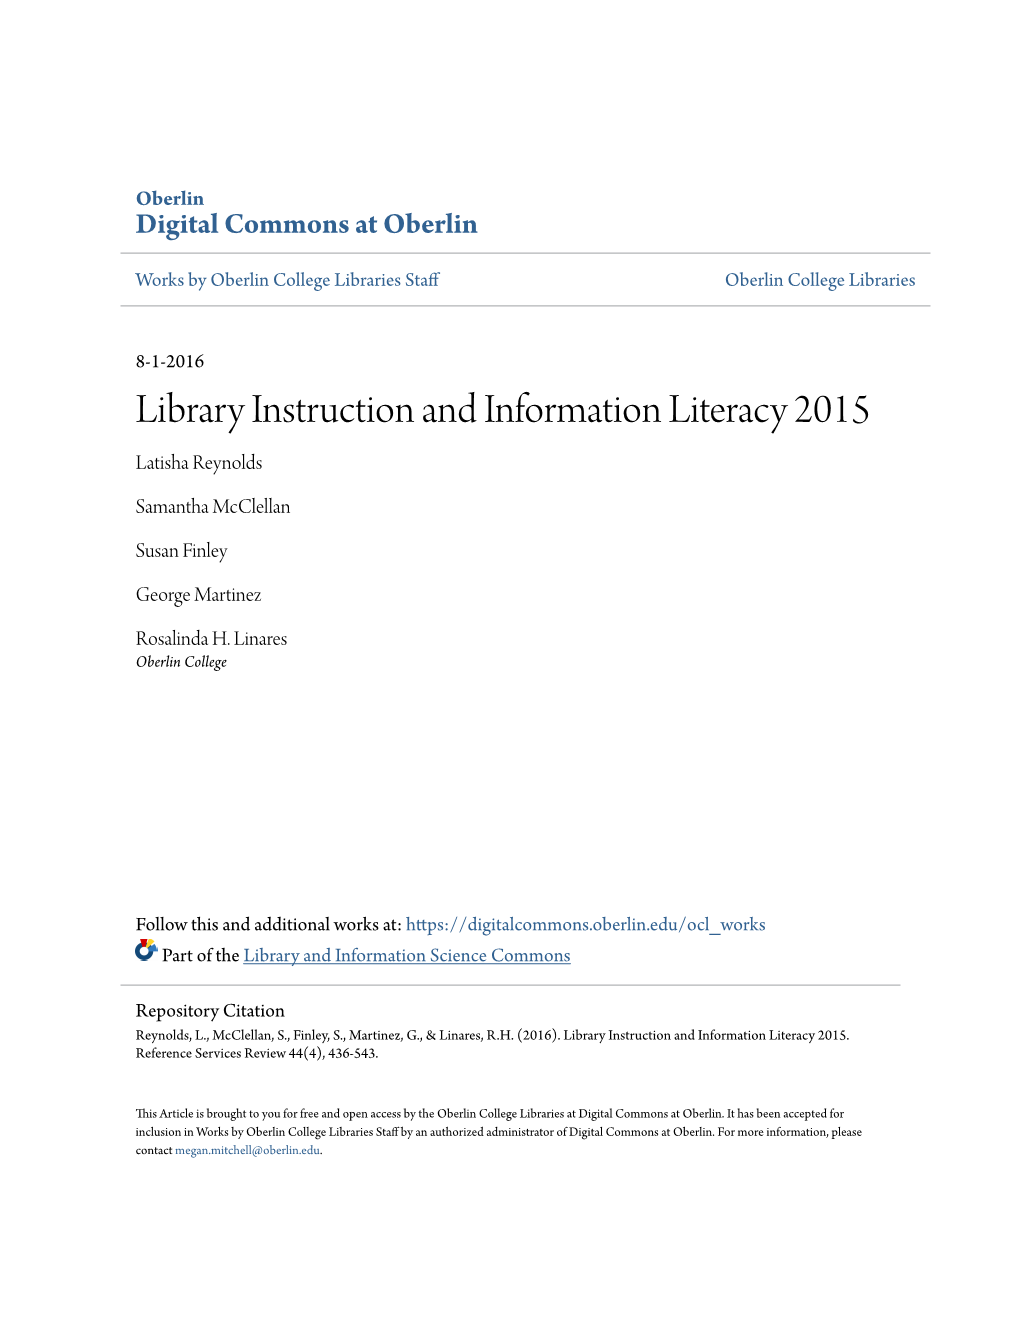 Library Instruction and Information Literacy 2015 Latisha Reynolds